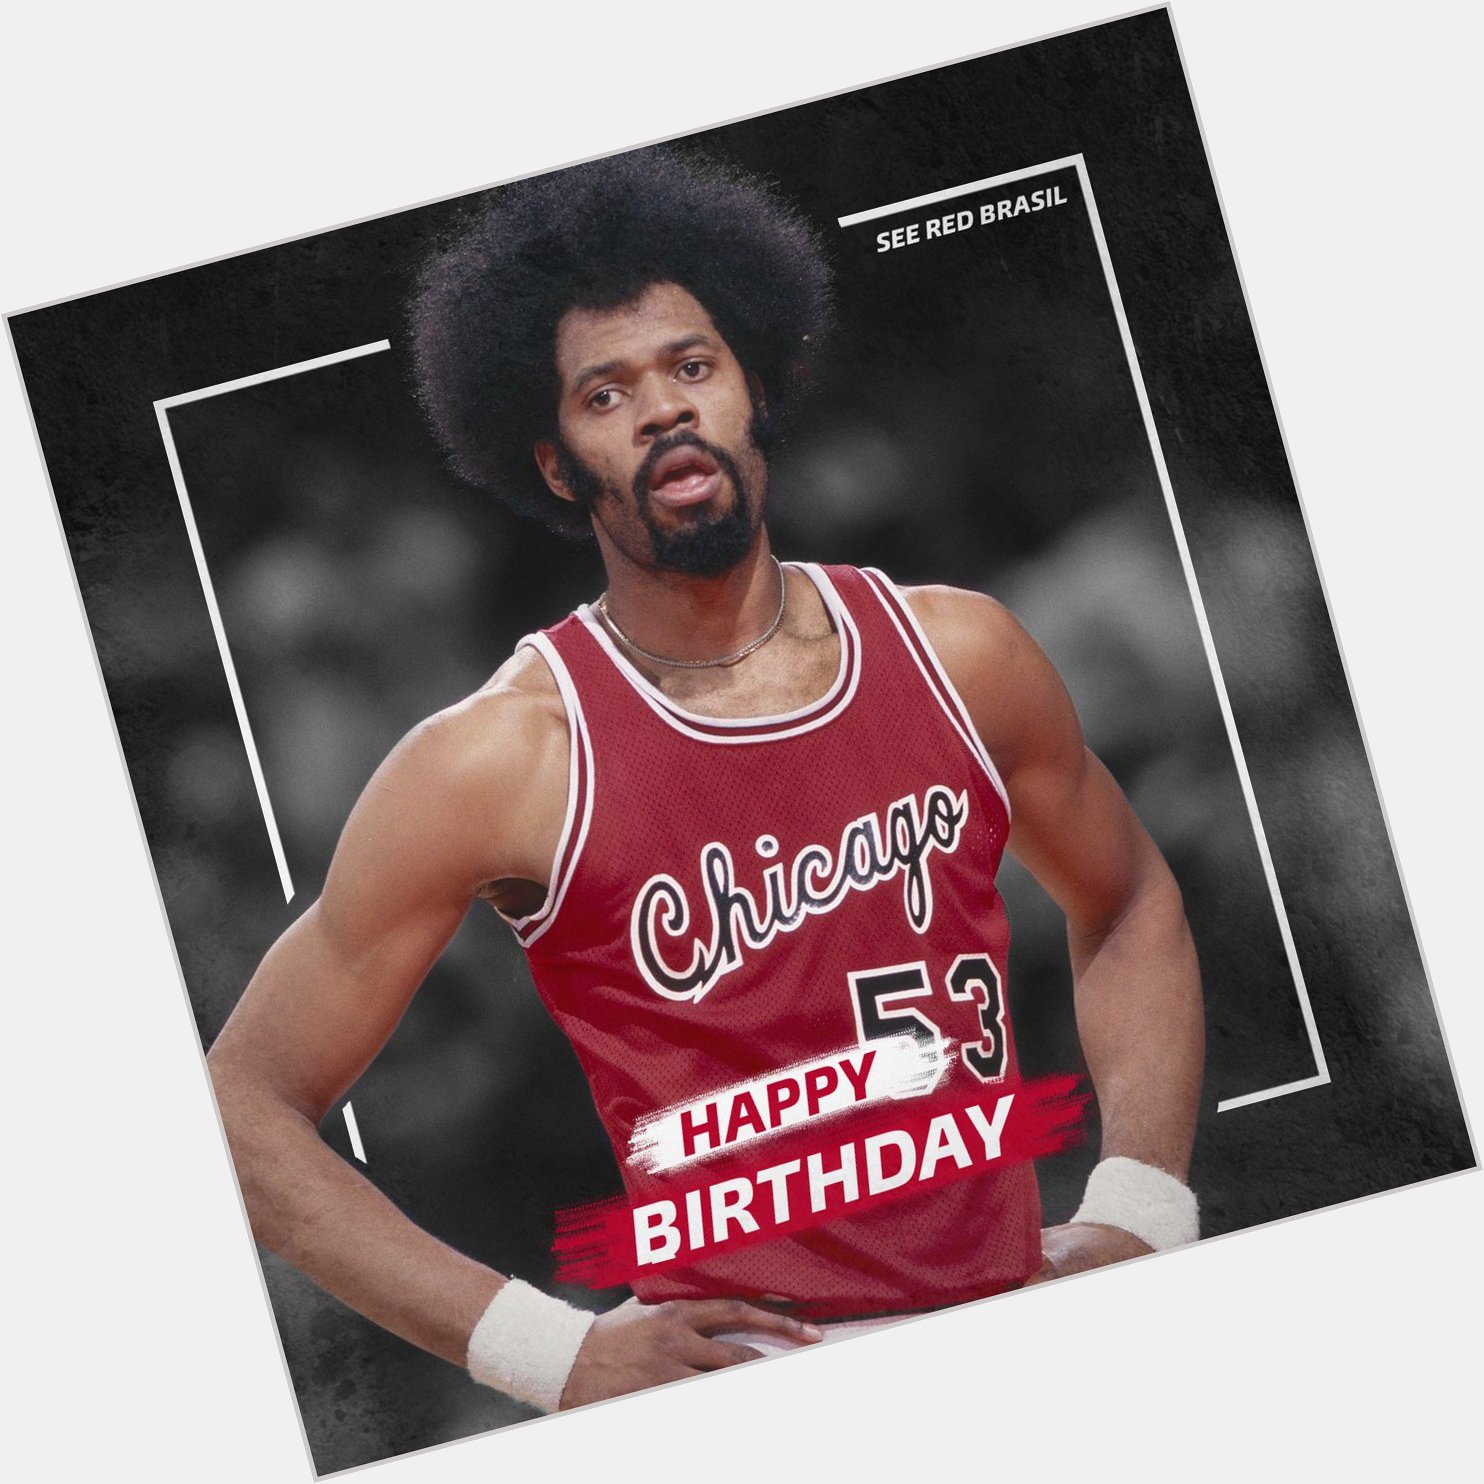 Happy Birthday legend!
Artis Gilmore     